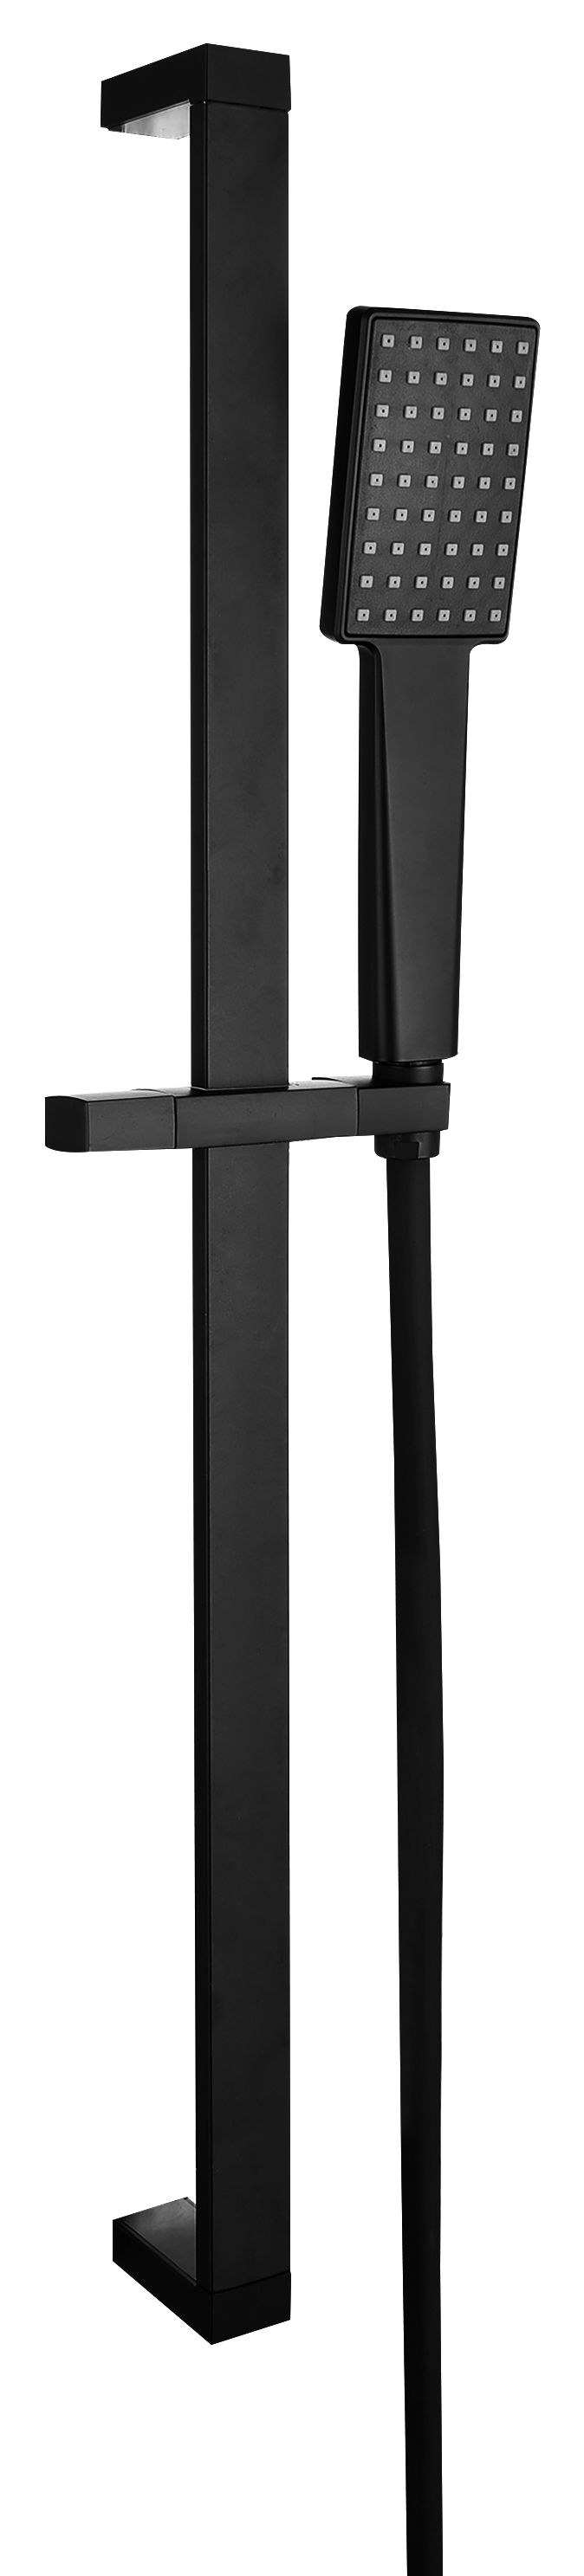 Bristan Square Shower Kit with Single Function Handset - Black